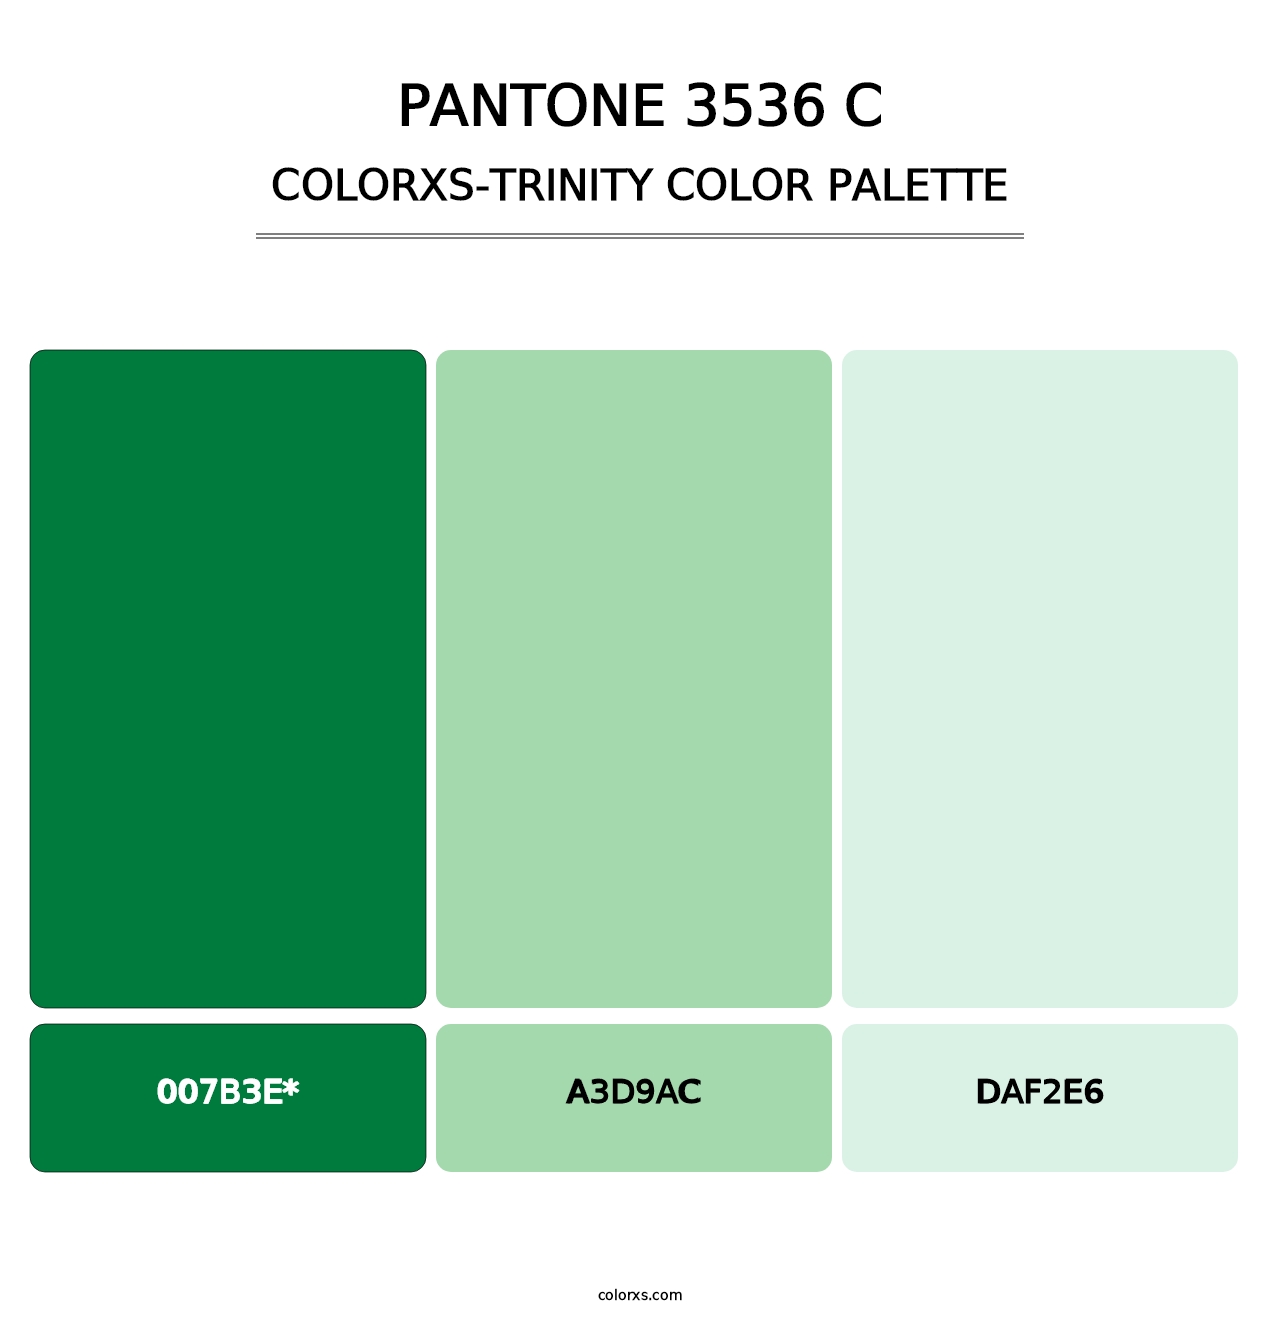 PANTONE 3536 C - Colorxs Trinity Palette